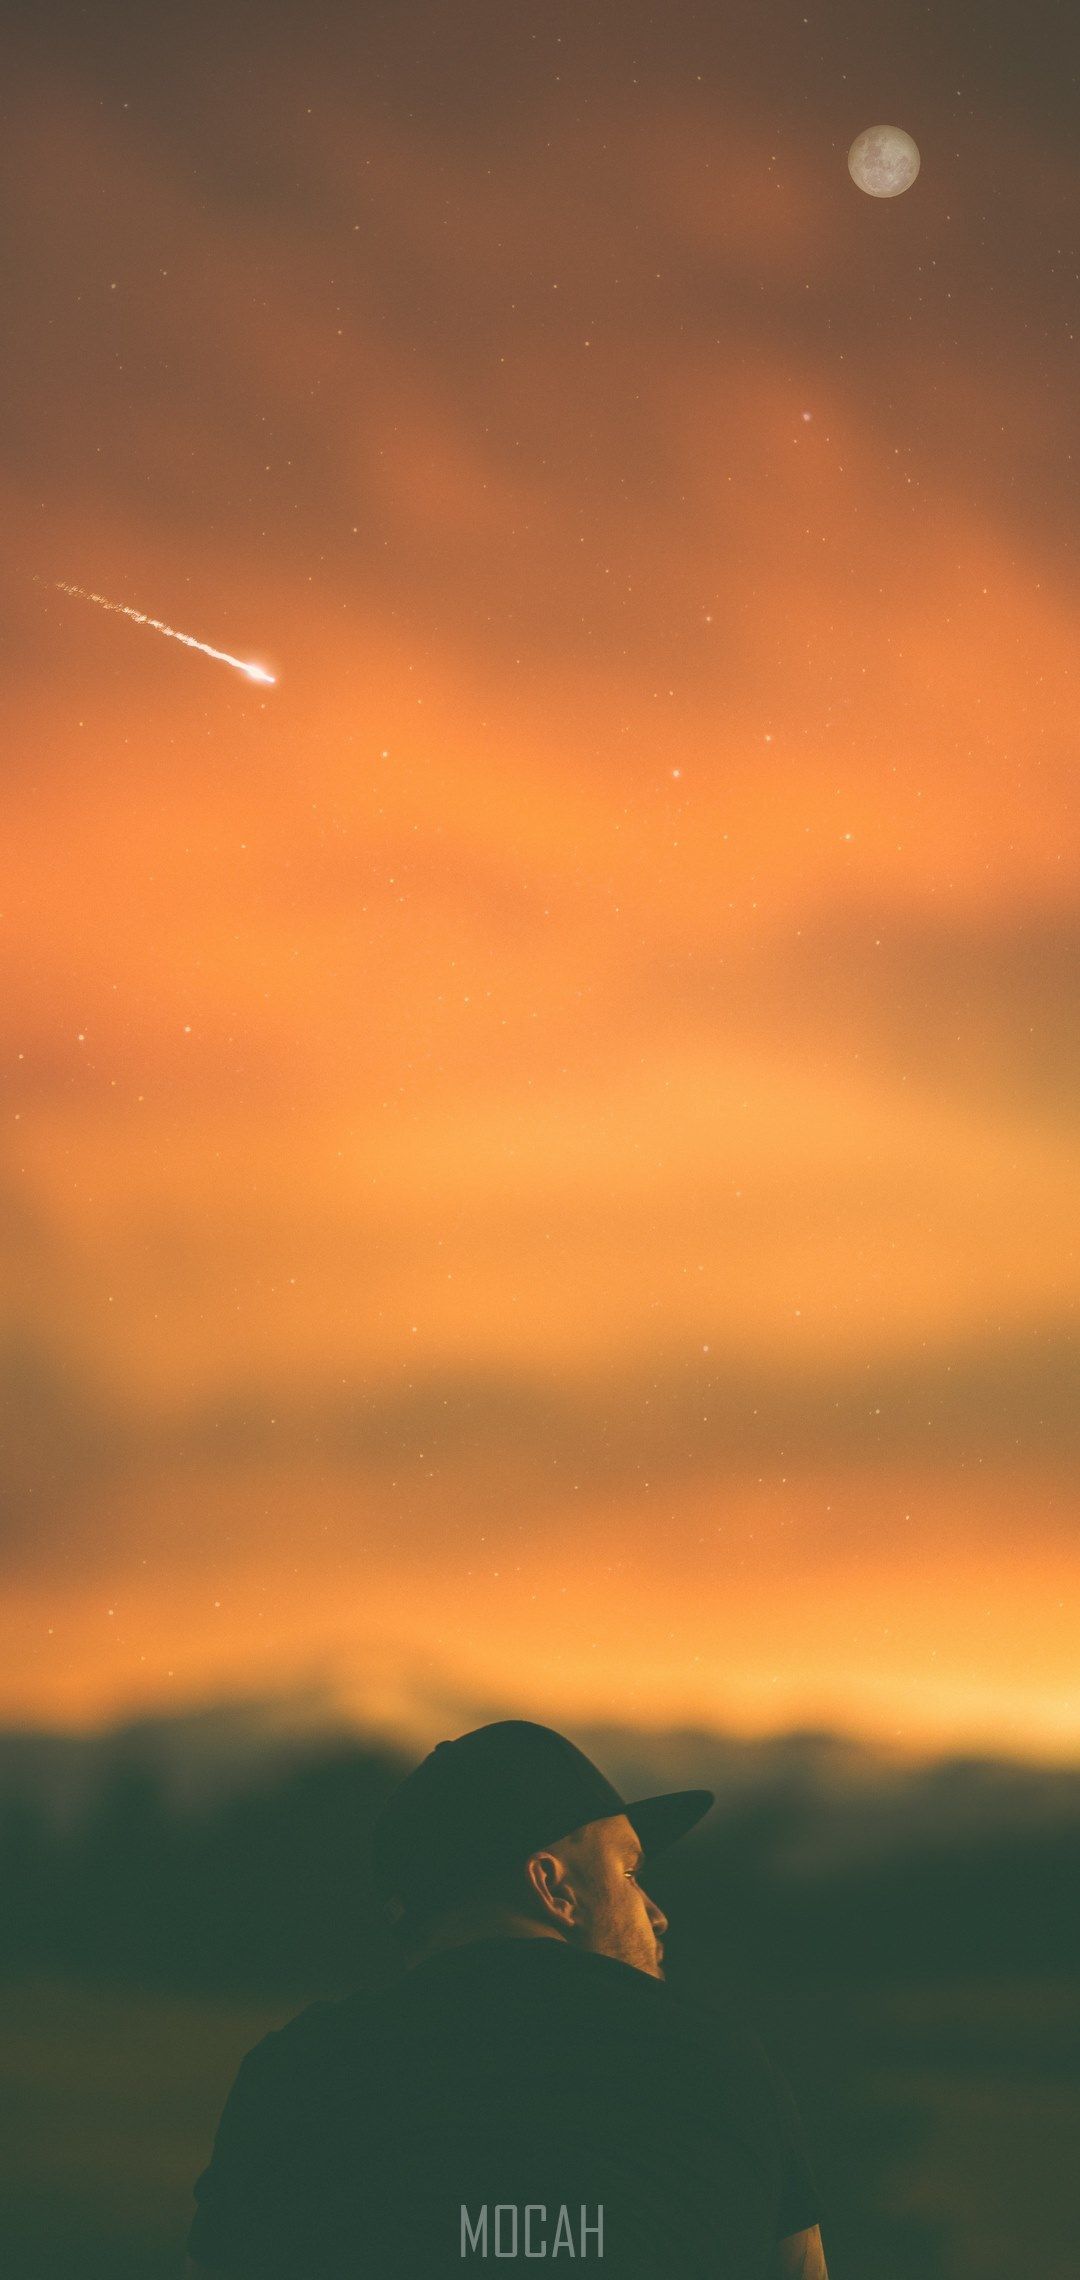 man sits beneath an orange sky where a meteor streaks and a full moon rises, man moon meteor at dusk, Flipkart Billion Capture+ wallpaper hd, 1080x1920 Gallery HD Wallpaper